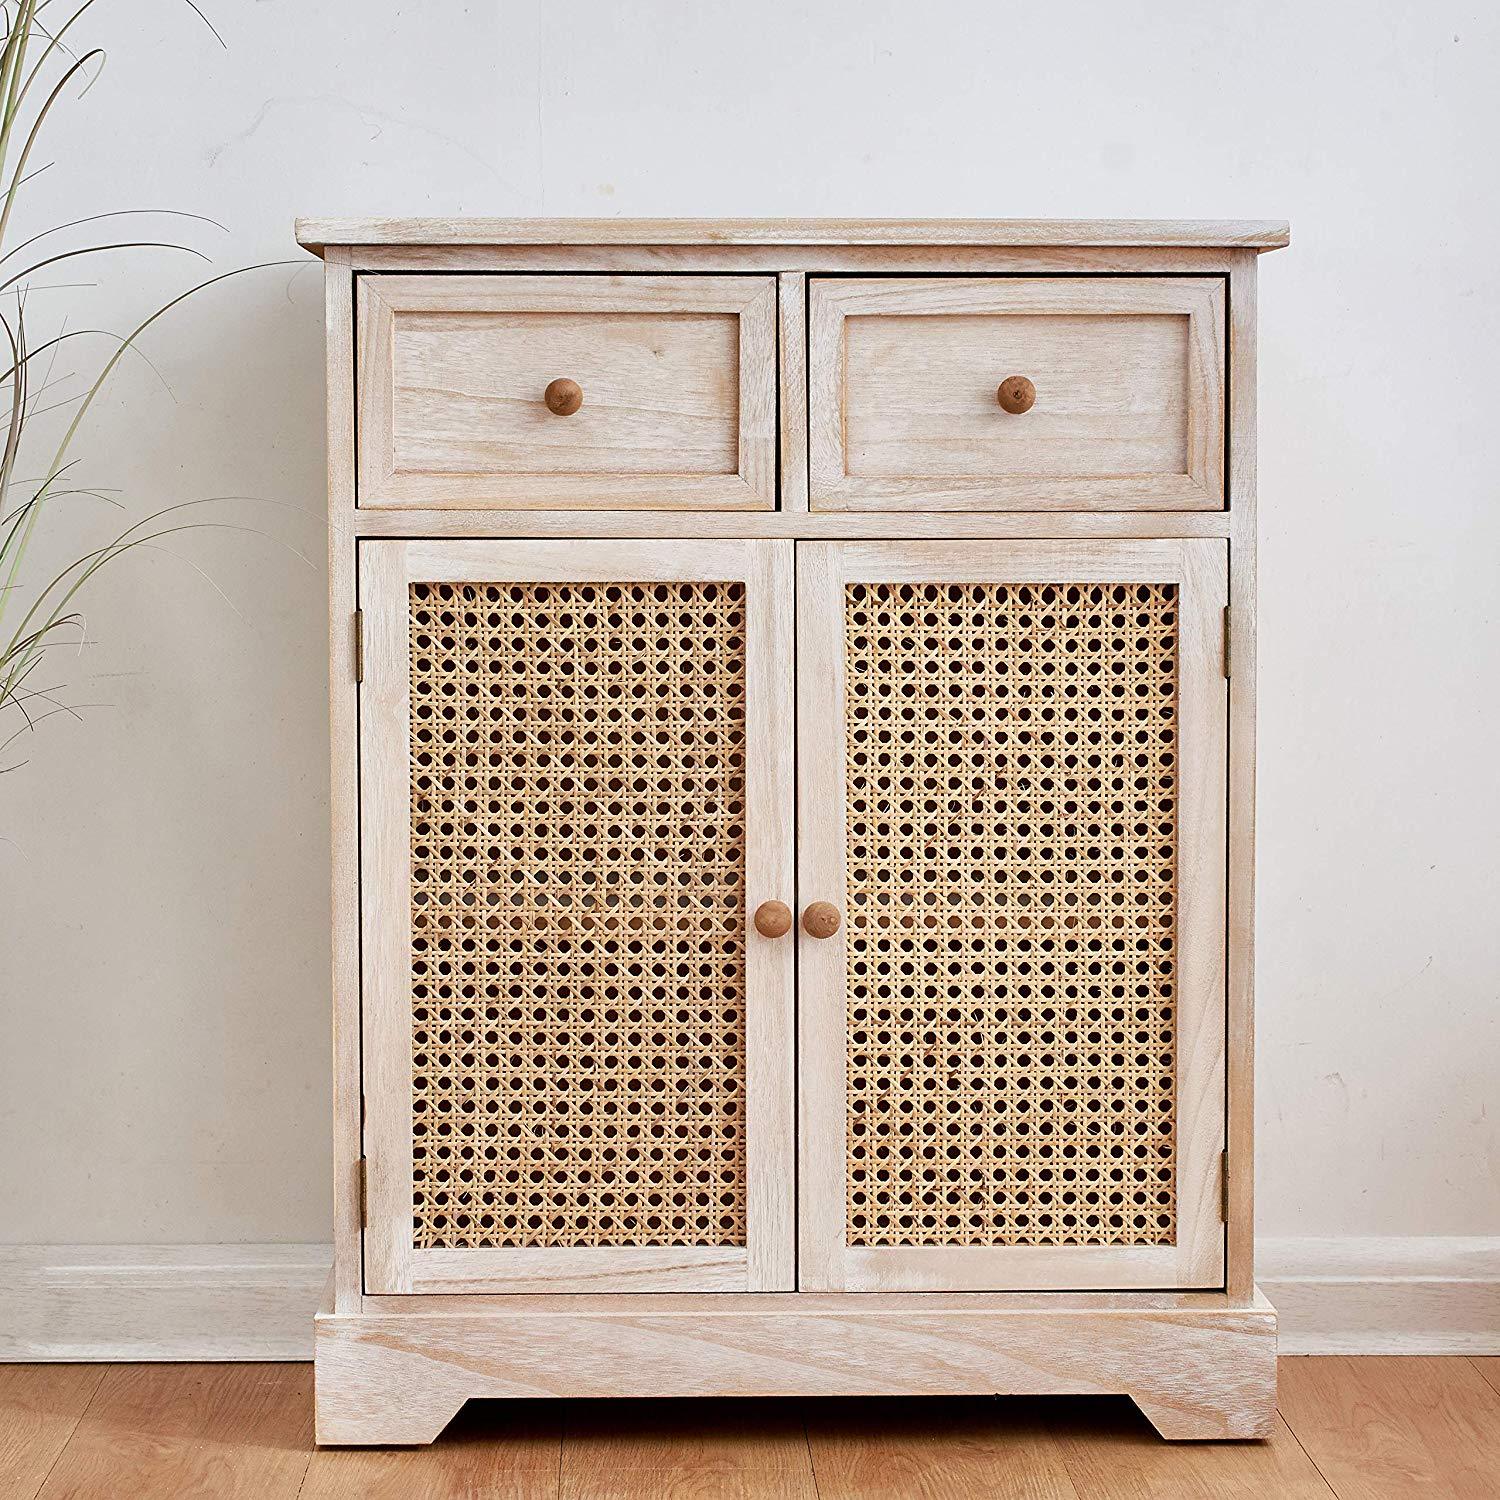 Cherry Tree Furniture REGA Rattan Cane & Paulownia Wood 2-Drawer 2-Door Cabinet Storage Sideboard